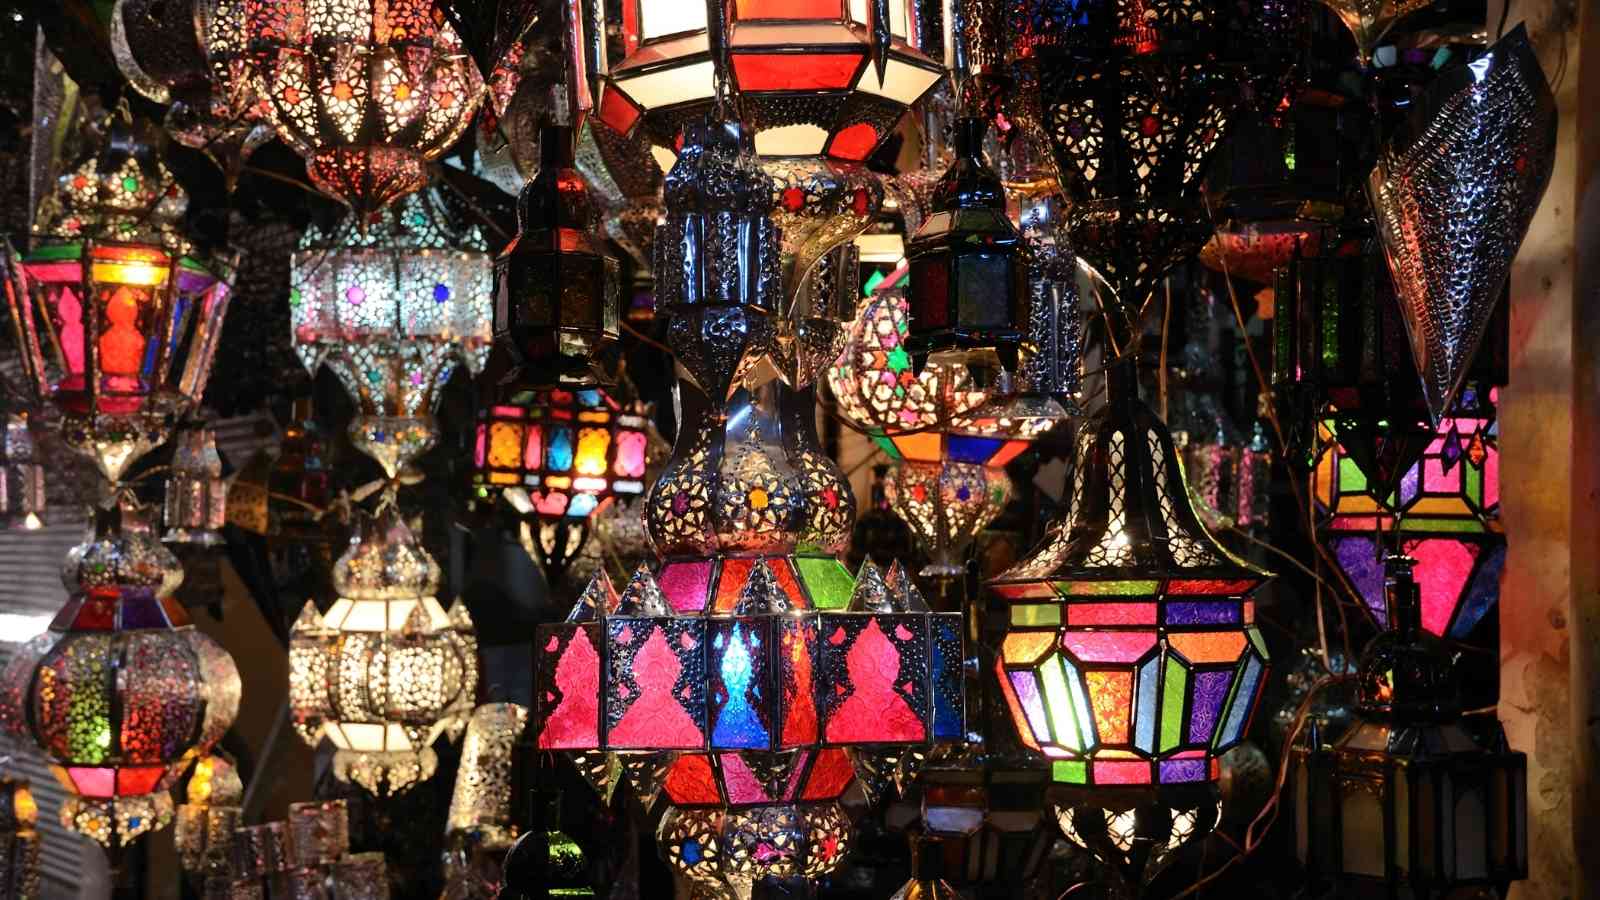 Moroccan Lamp